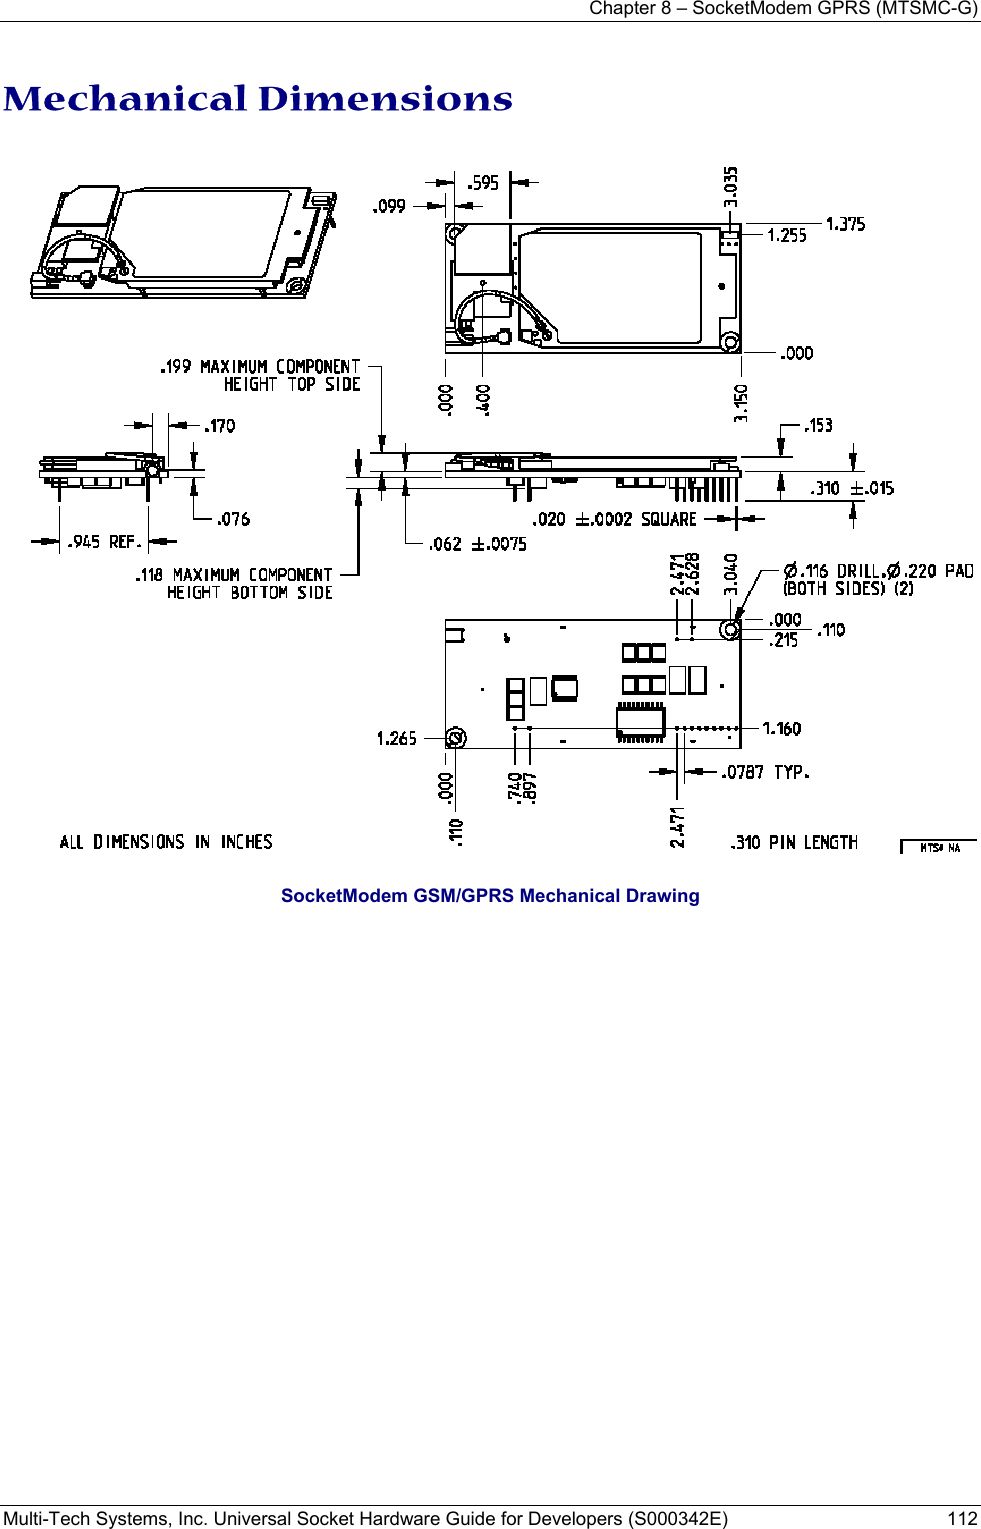 Chapter 8 – SocketModem GPRS (MTSMC-G) Multi-Tech Systems, Inc. Universal Socket Hardware Guide for Developers (S000342E)  112  Mechanical Dimensions    SocketModem GSM/GPRS Mechanical Drawing  